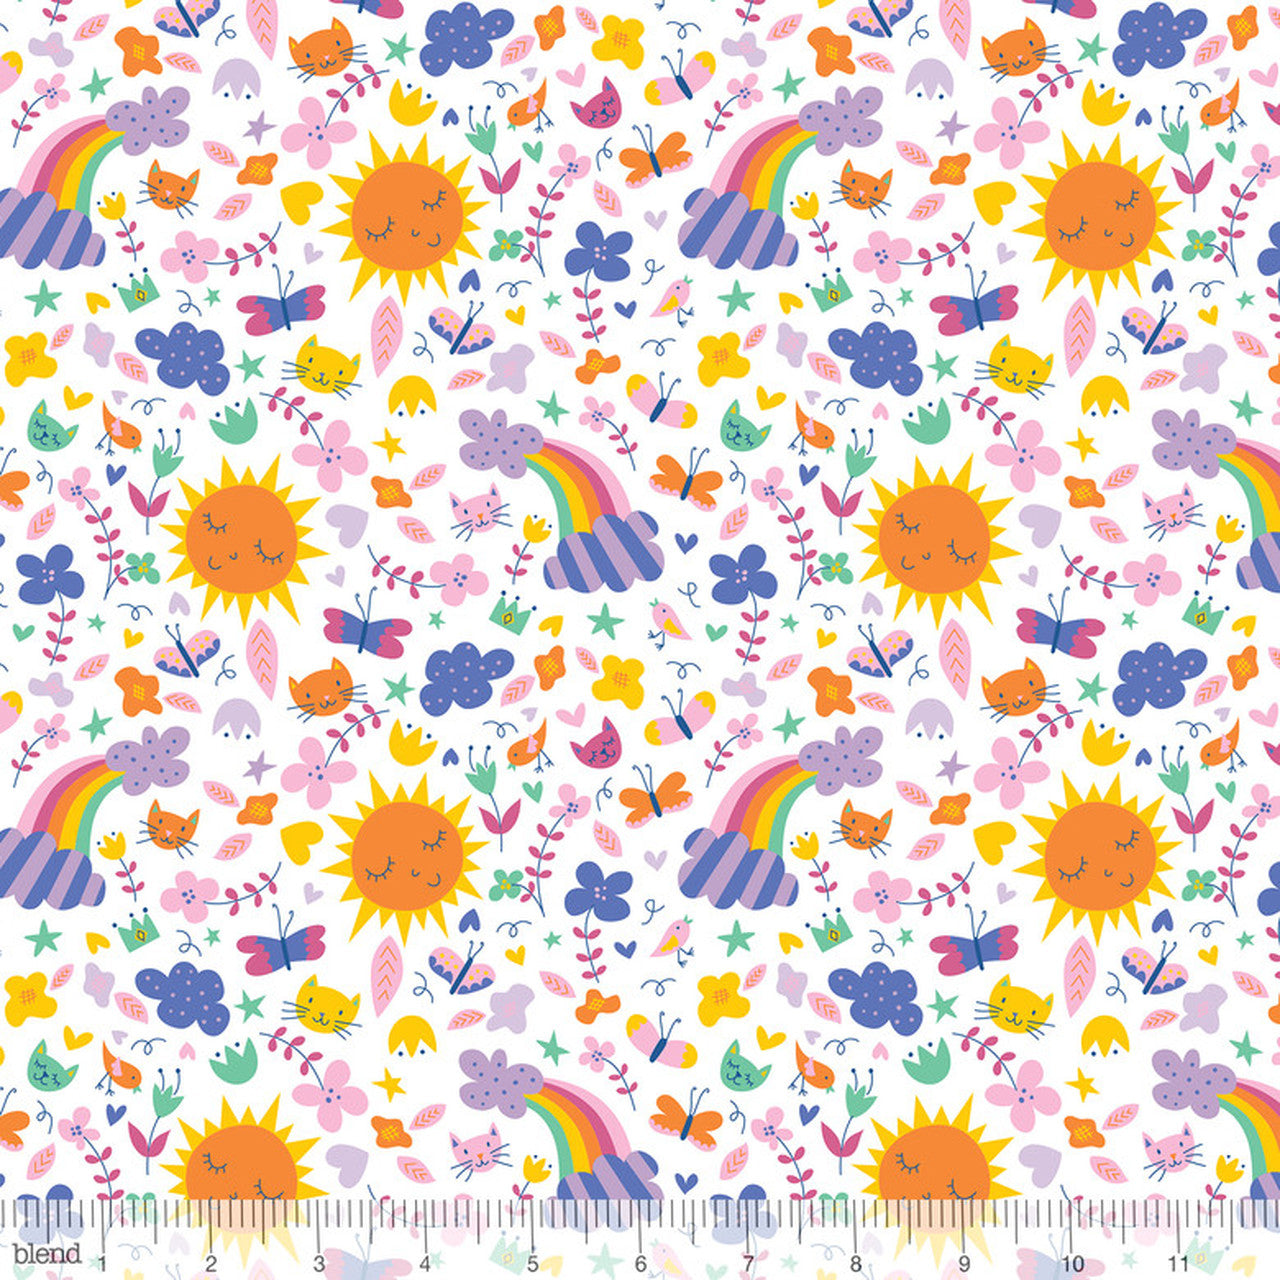 Sunshine & Rainbows - Happy Skies - Blend Cotton Fabric ✂️ £8 pm *SALE*